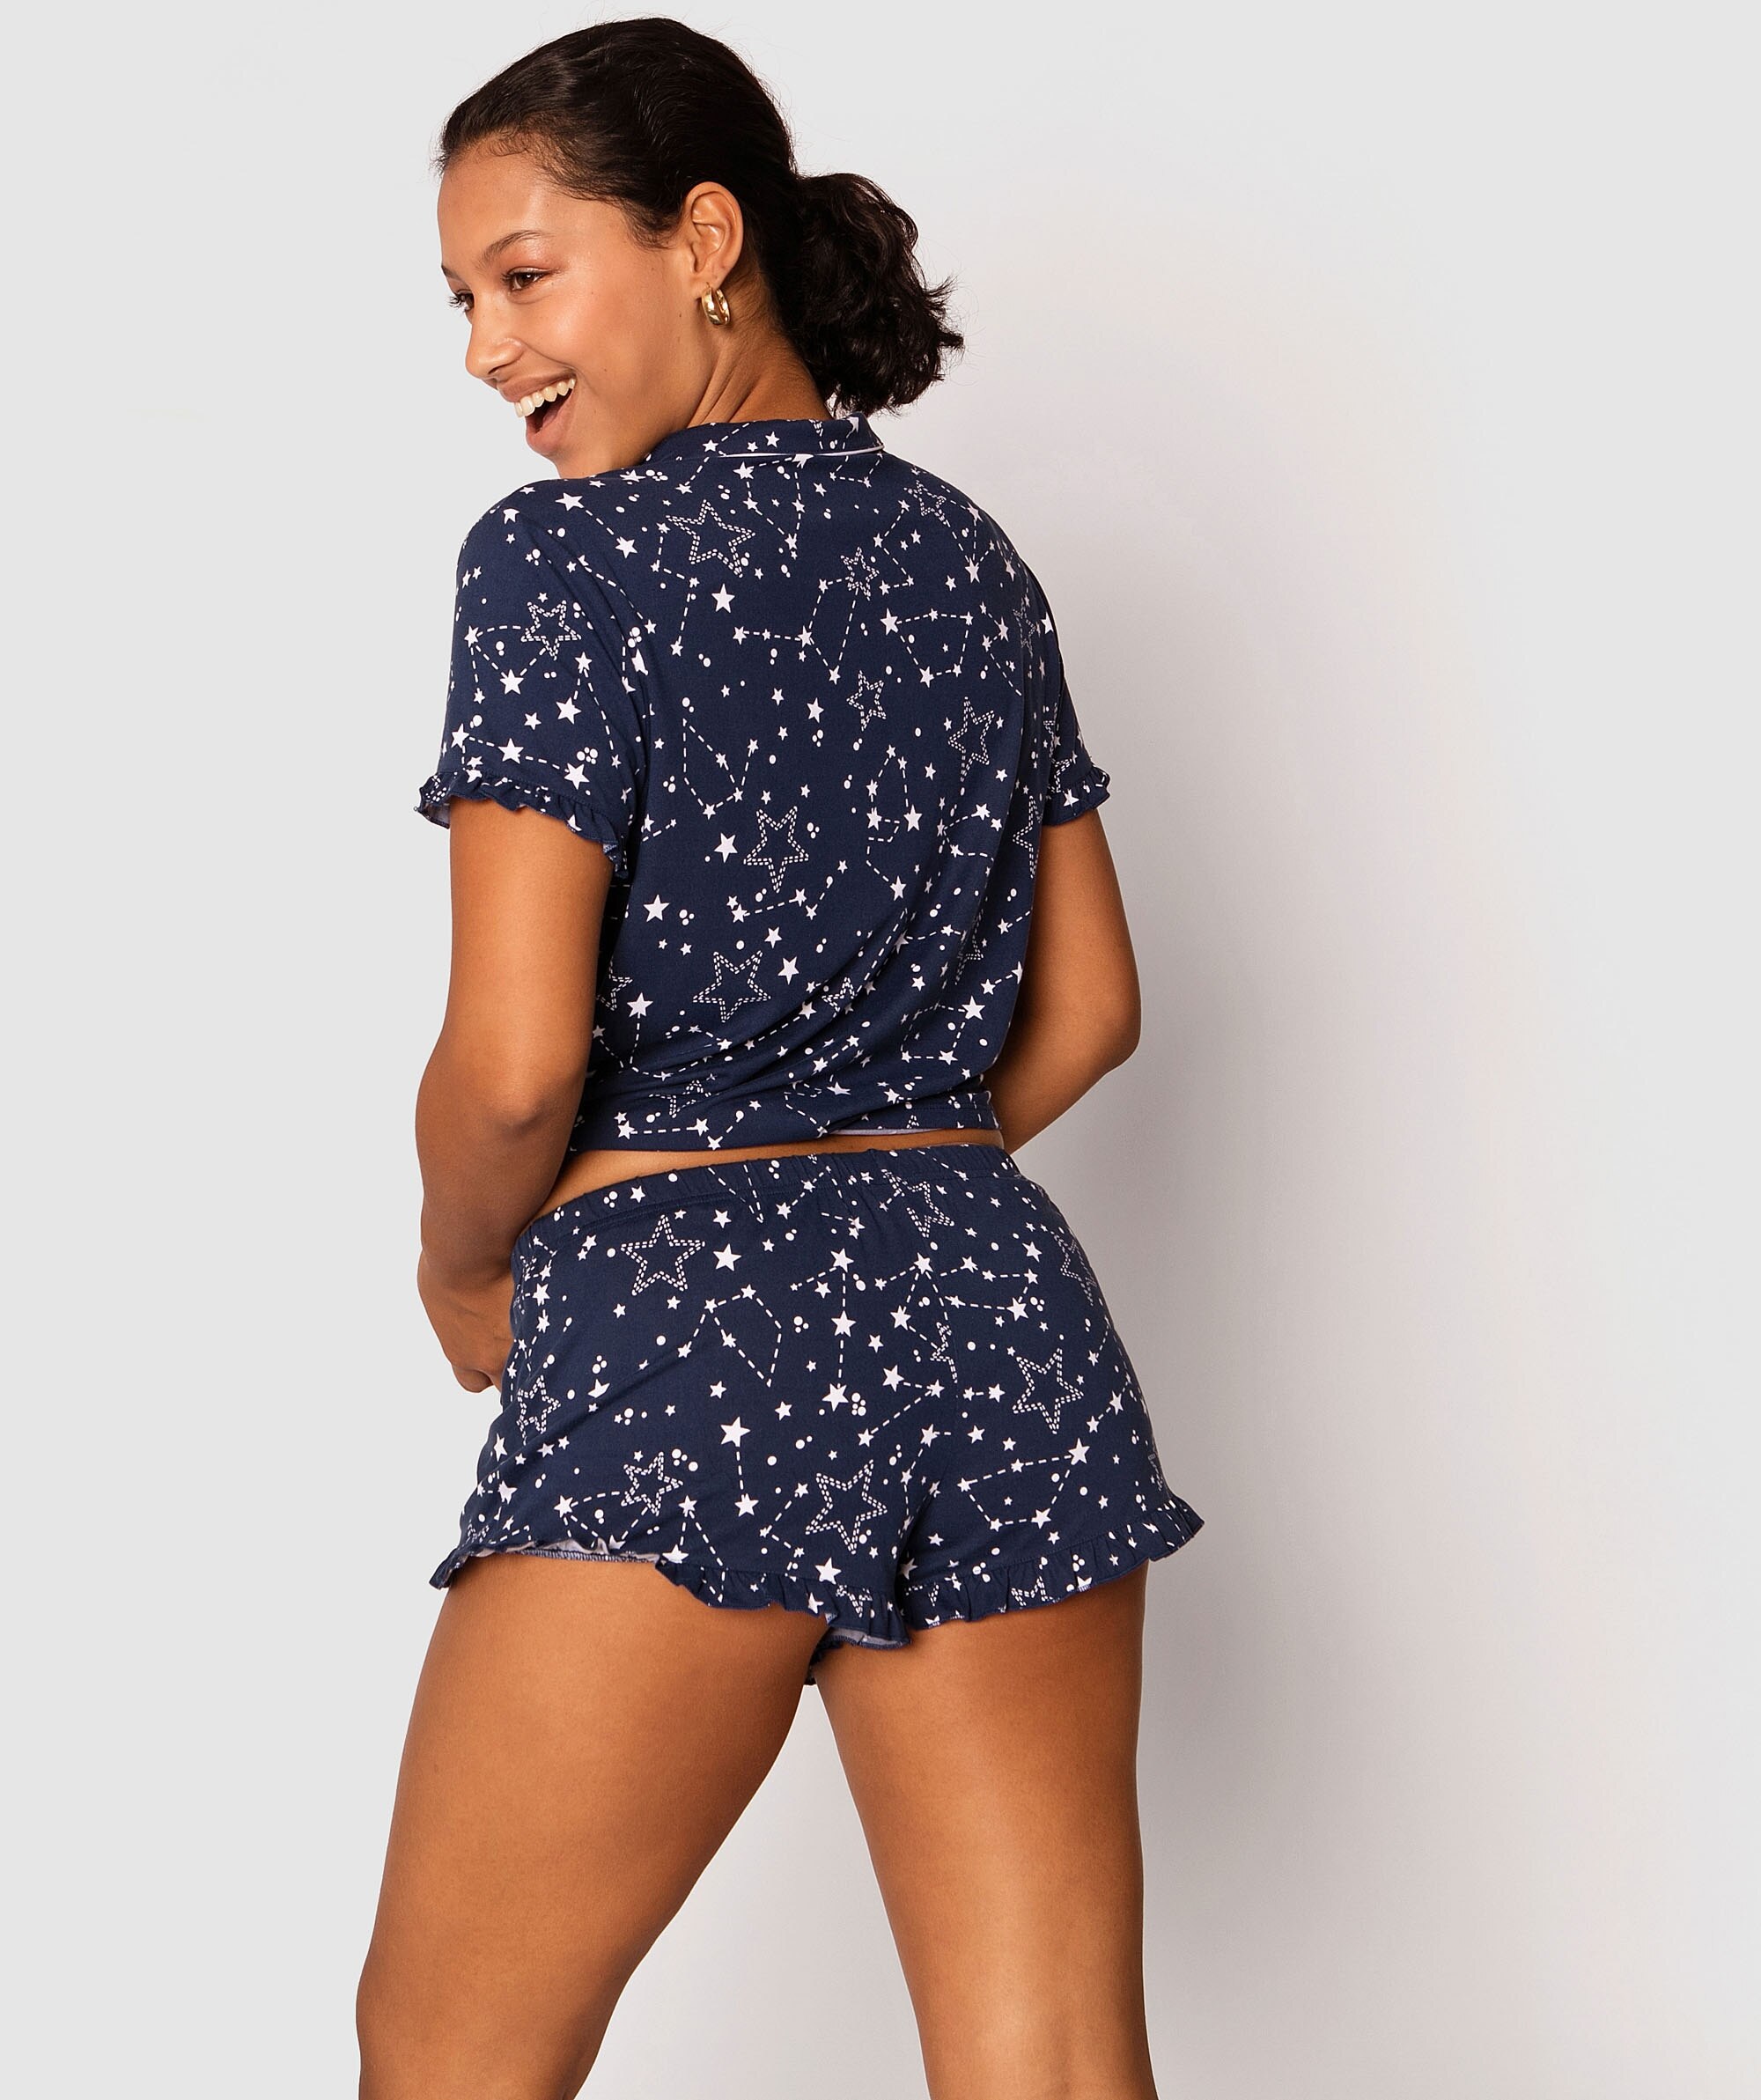 Cosmic Star Frill Shorts - Print 